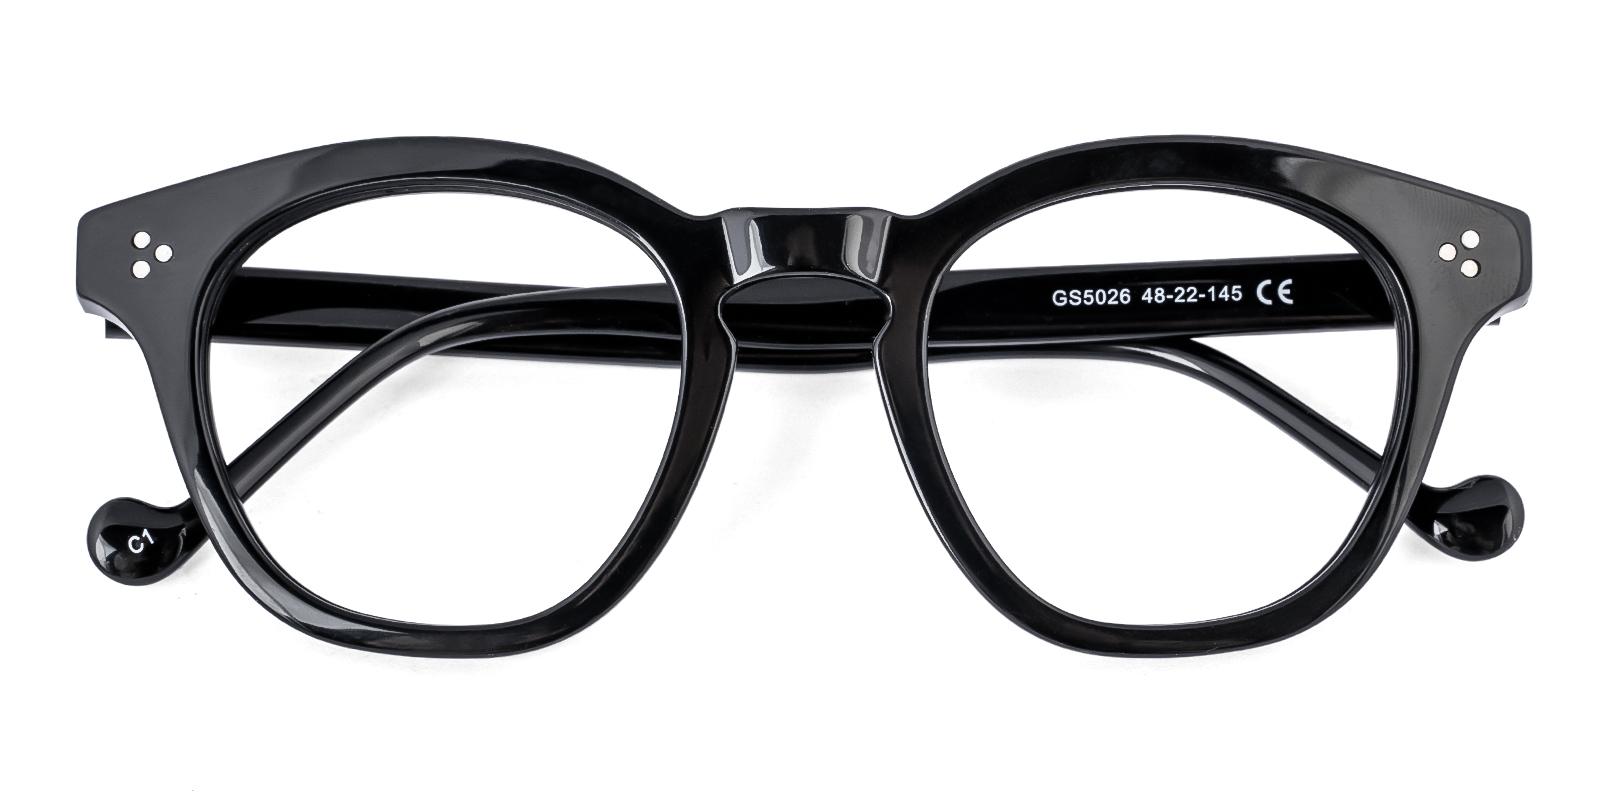 Calature Black Acetate Eyeglasses , UniversalBridgeFit Frames from ABBE Glasses